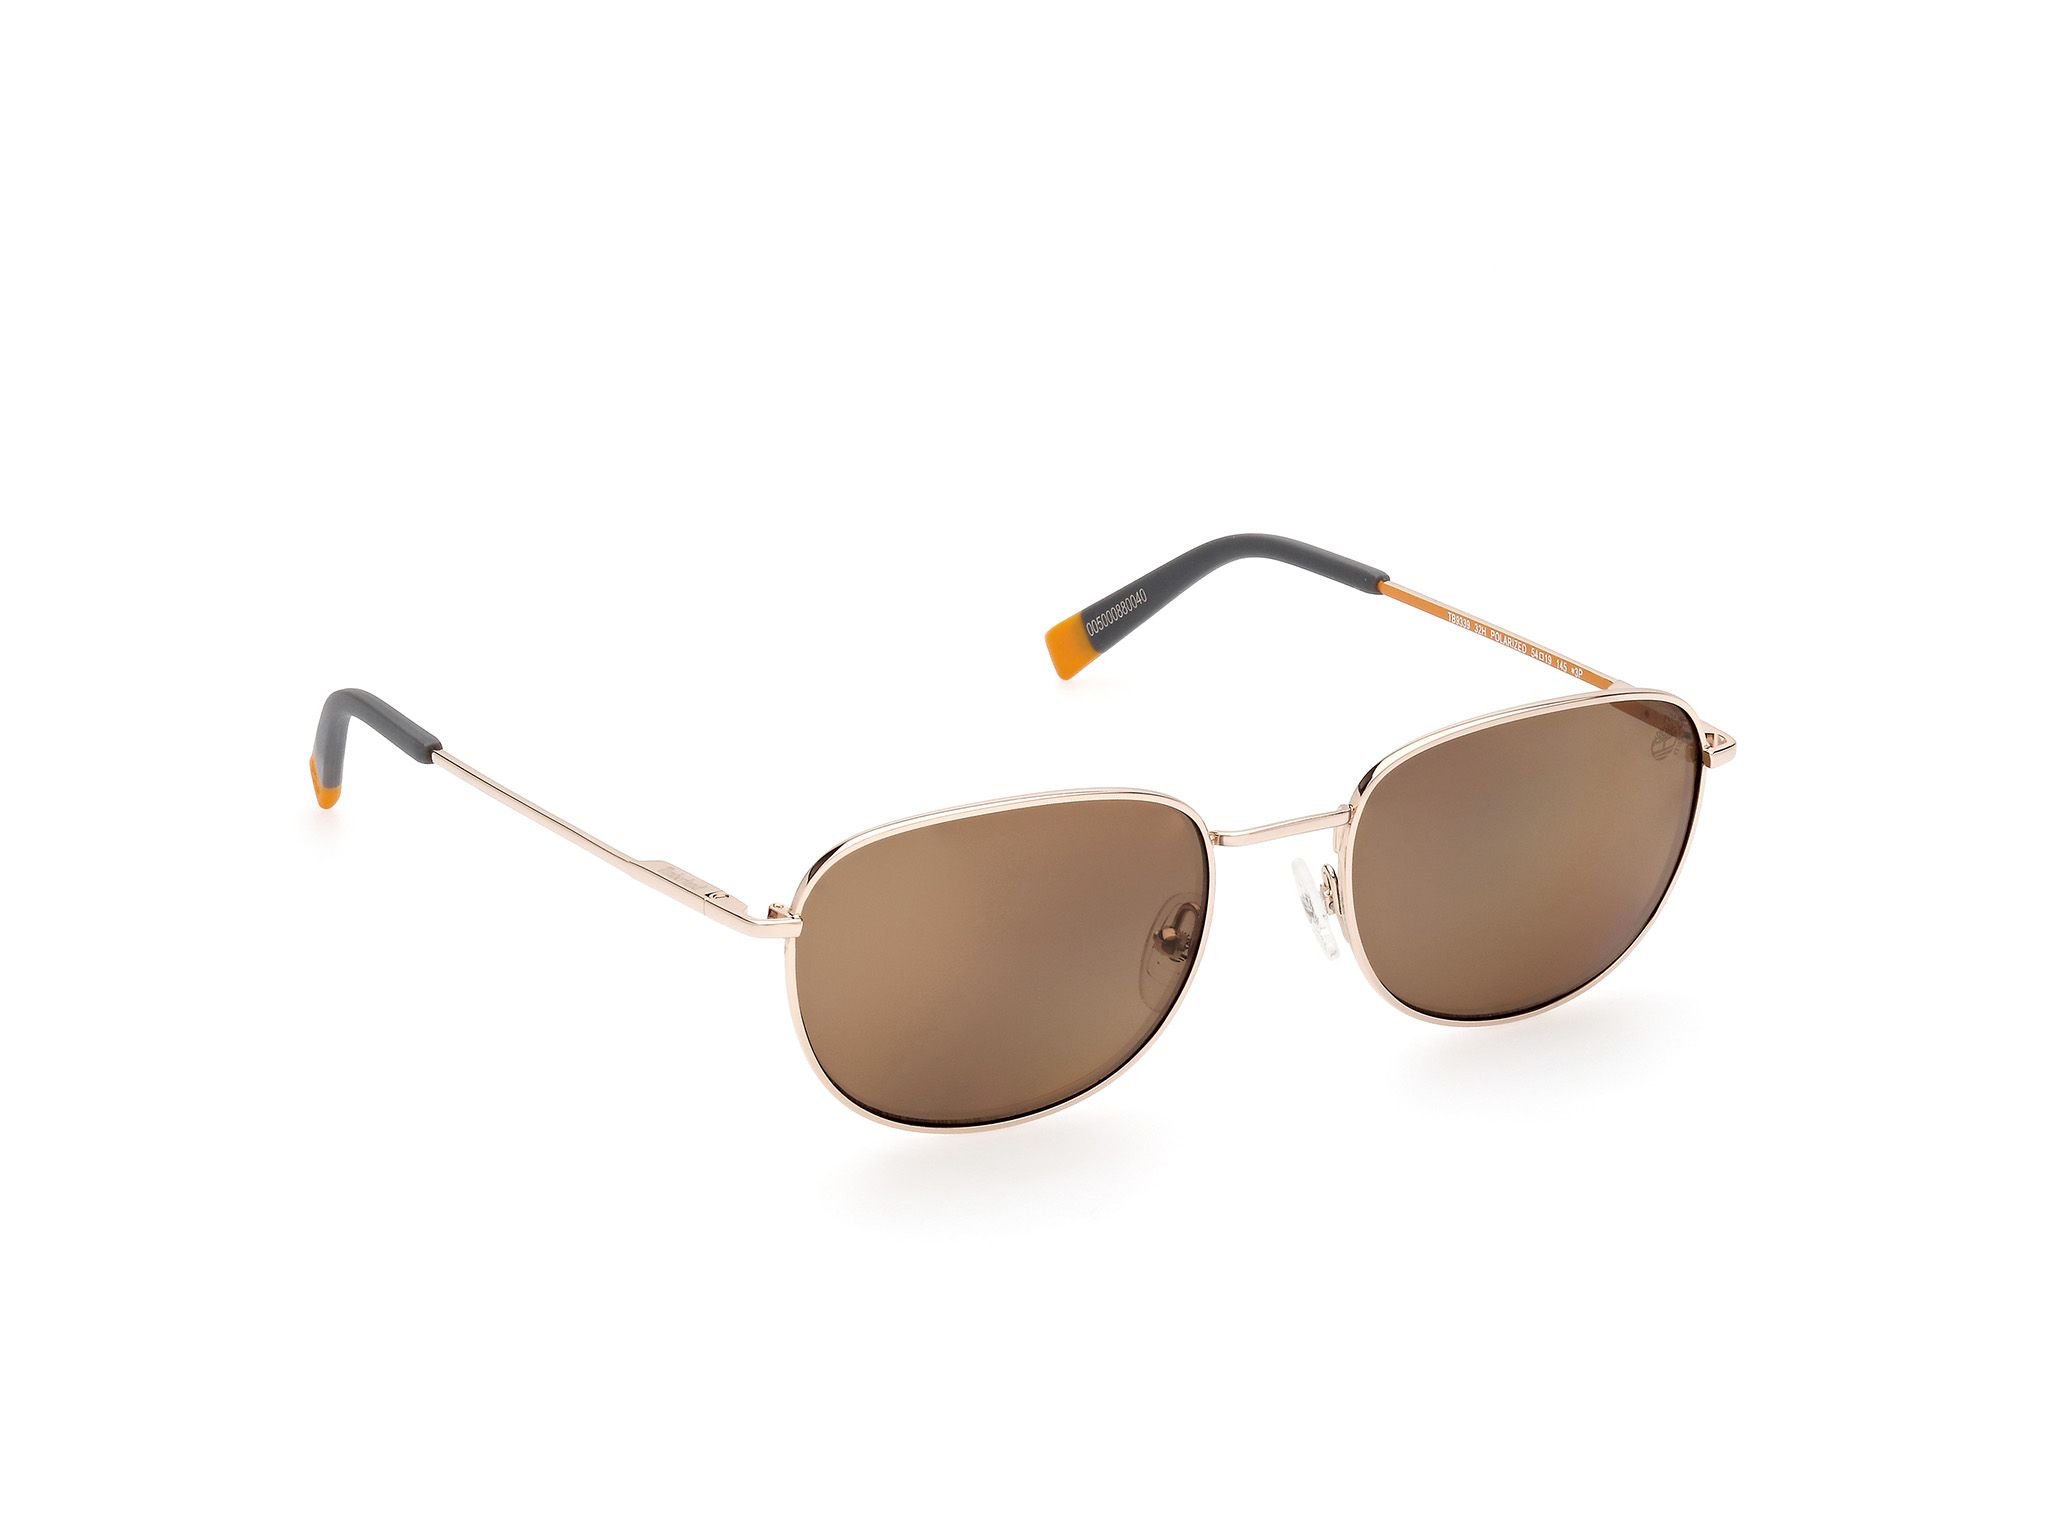 Timberland 9293 Sunglasses